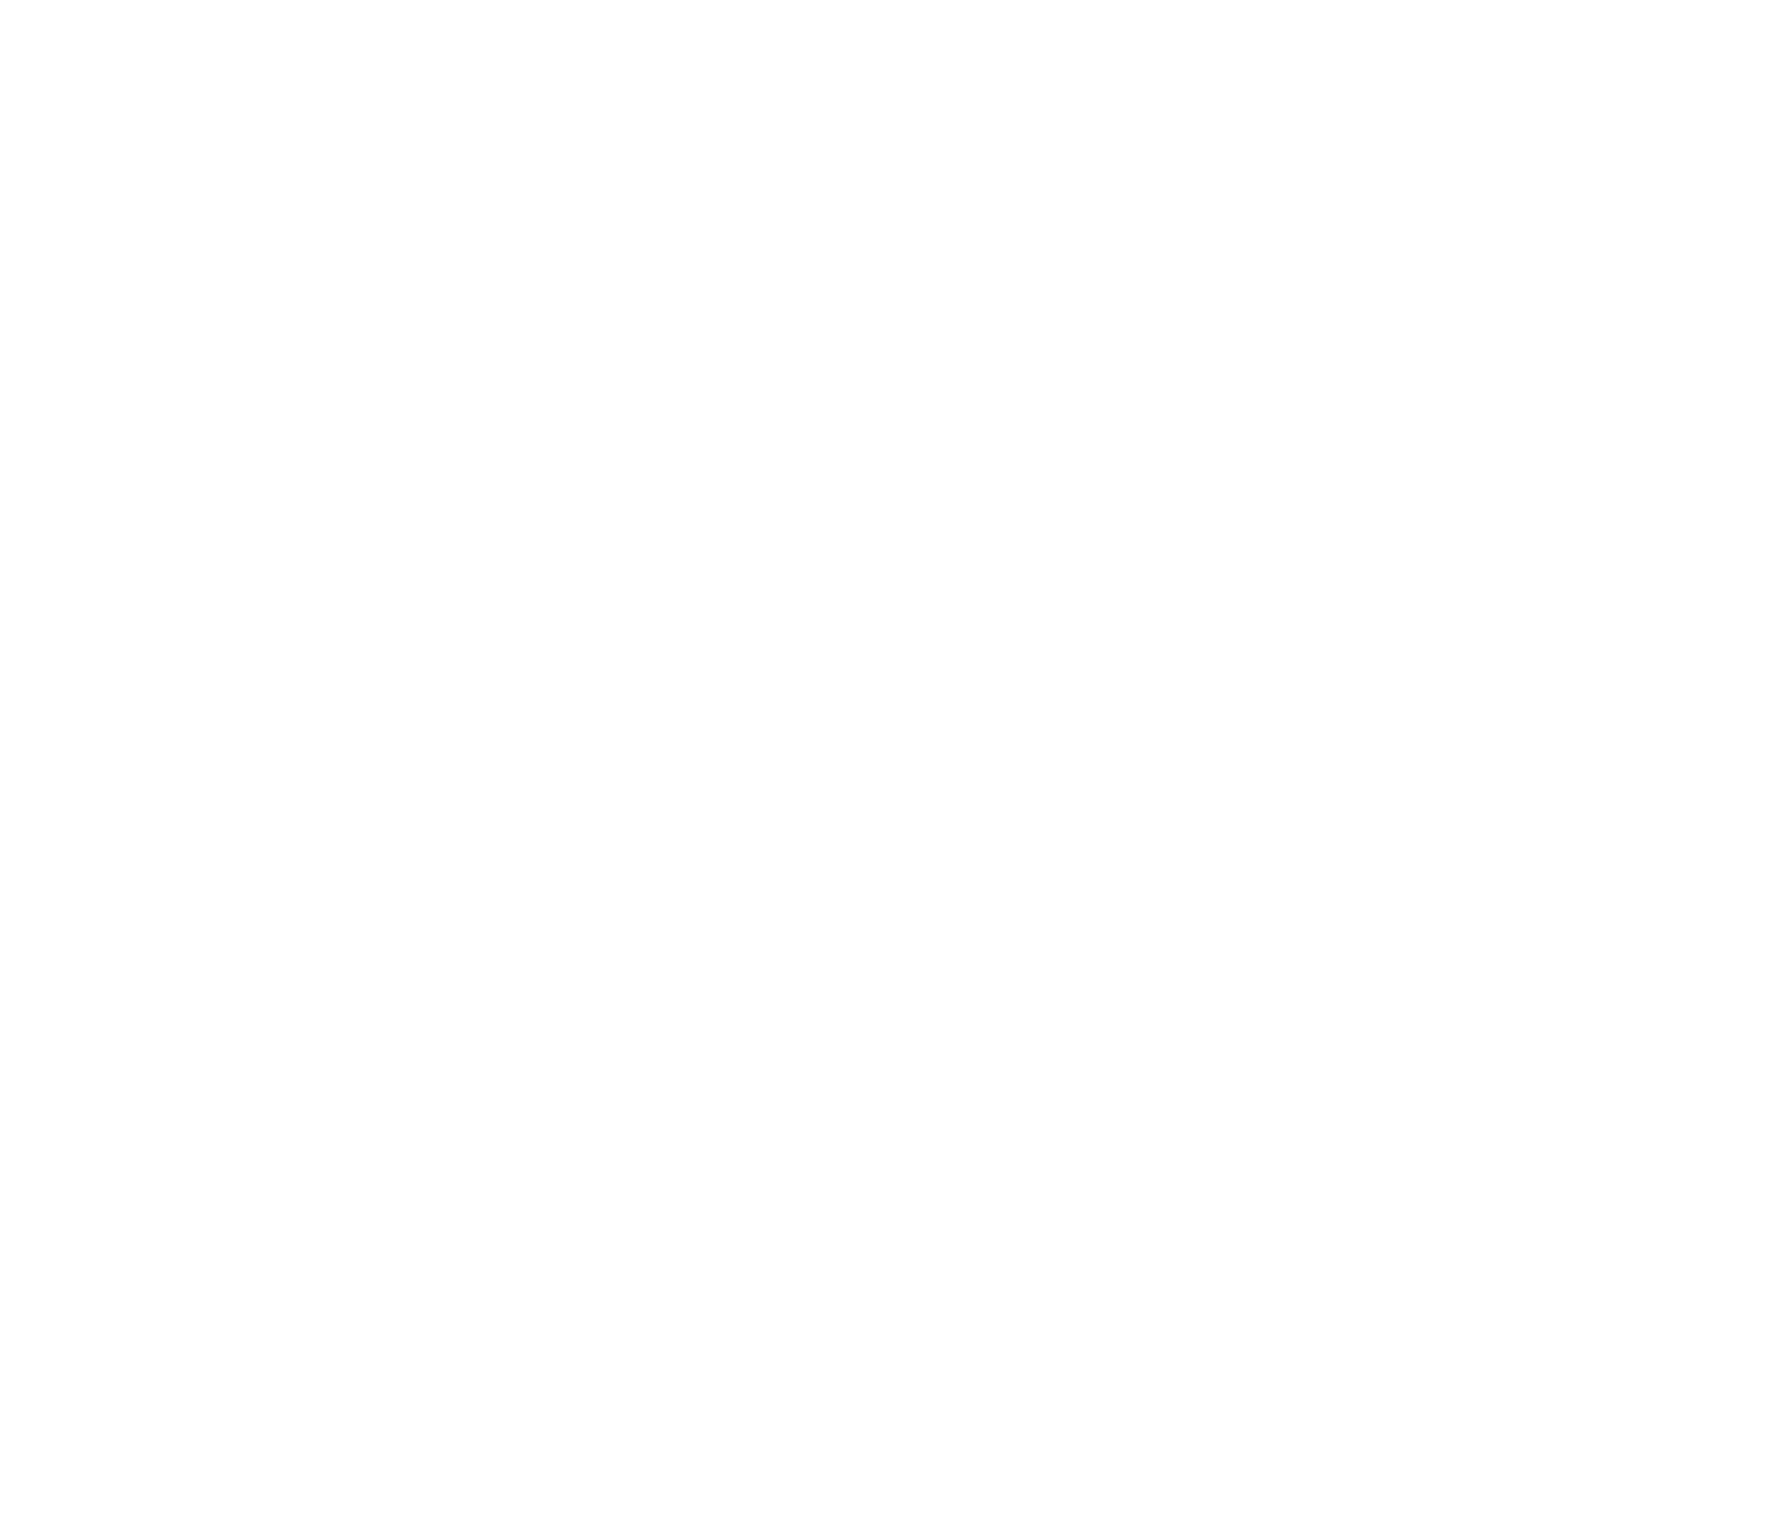 City Year, Inc.